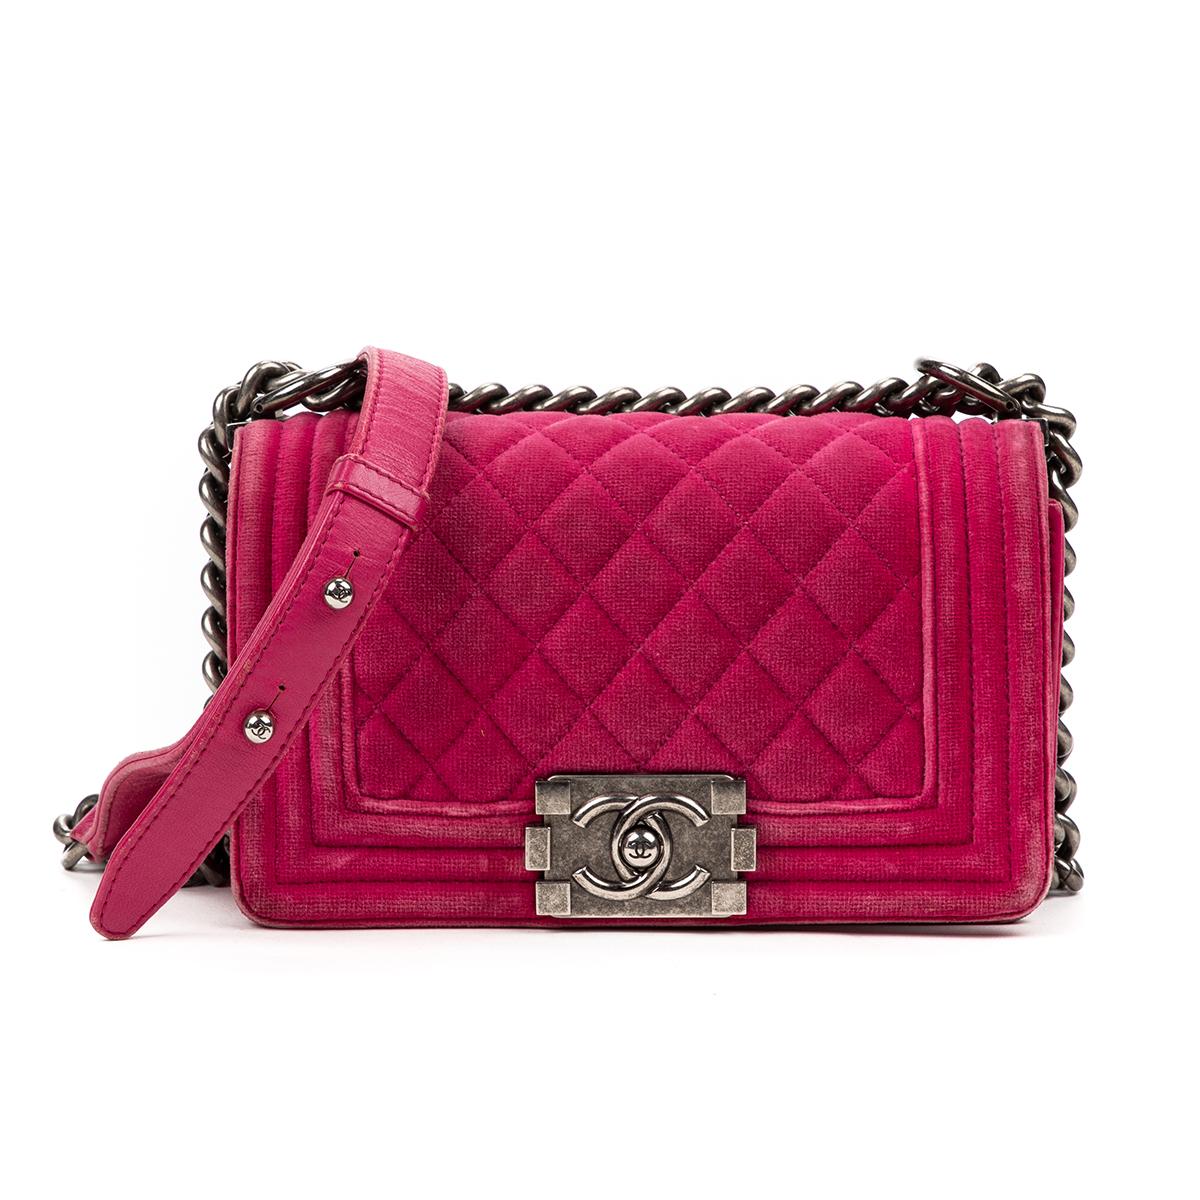 Chanel Leboy Small Bag - Price Estimate: $5500 - $7000